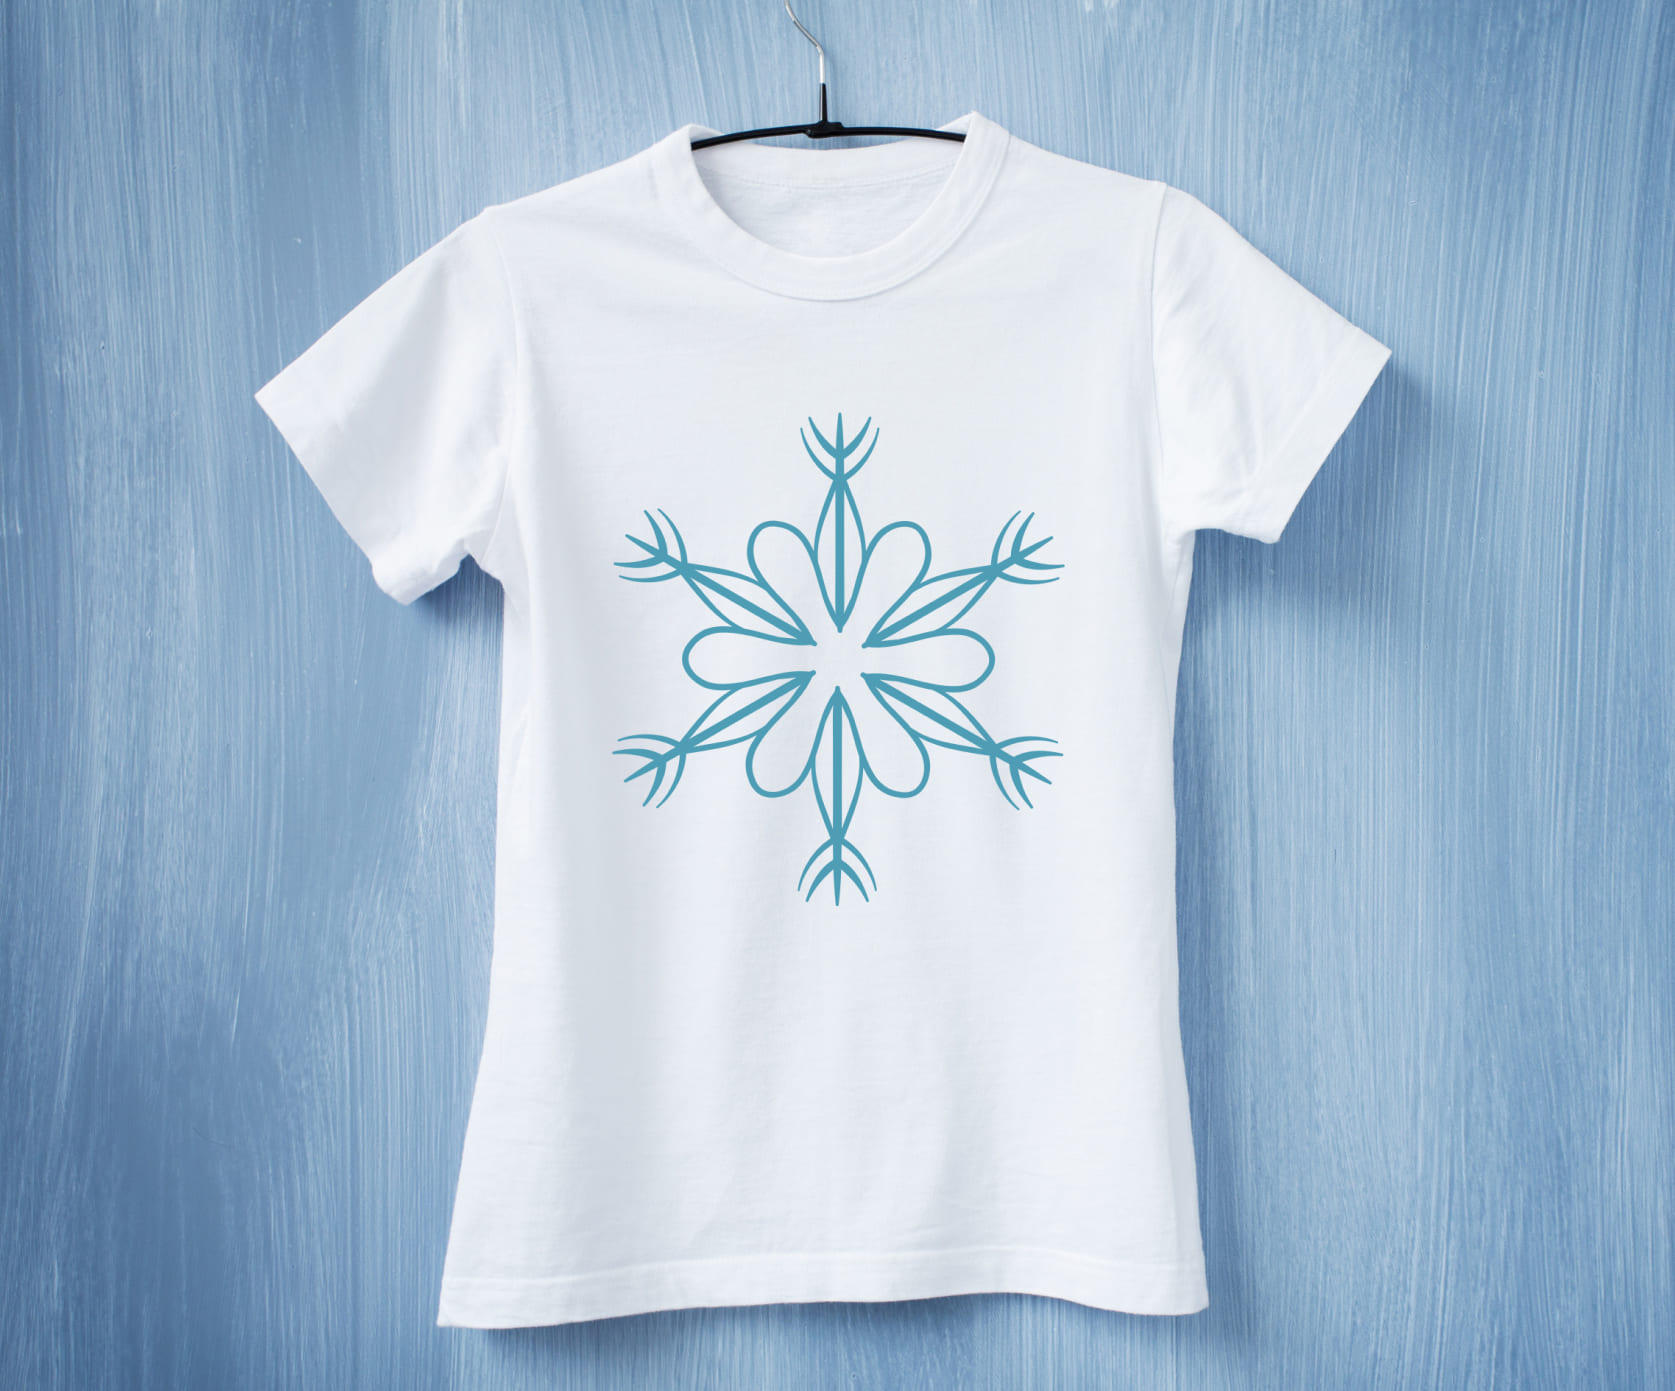 Interesting snowflake design for Christmas tree.